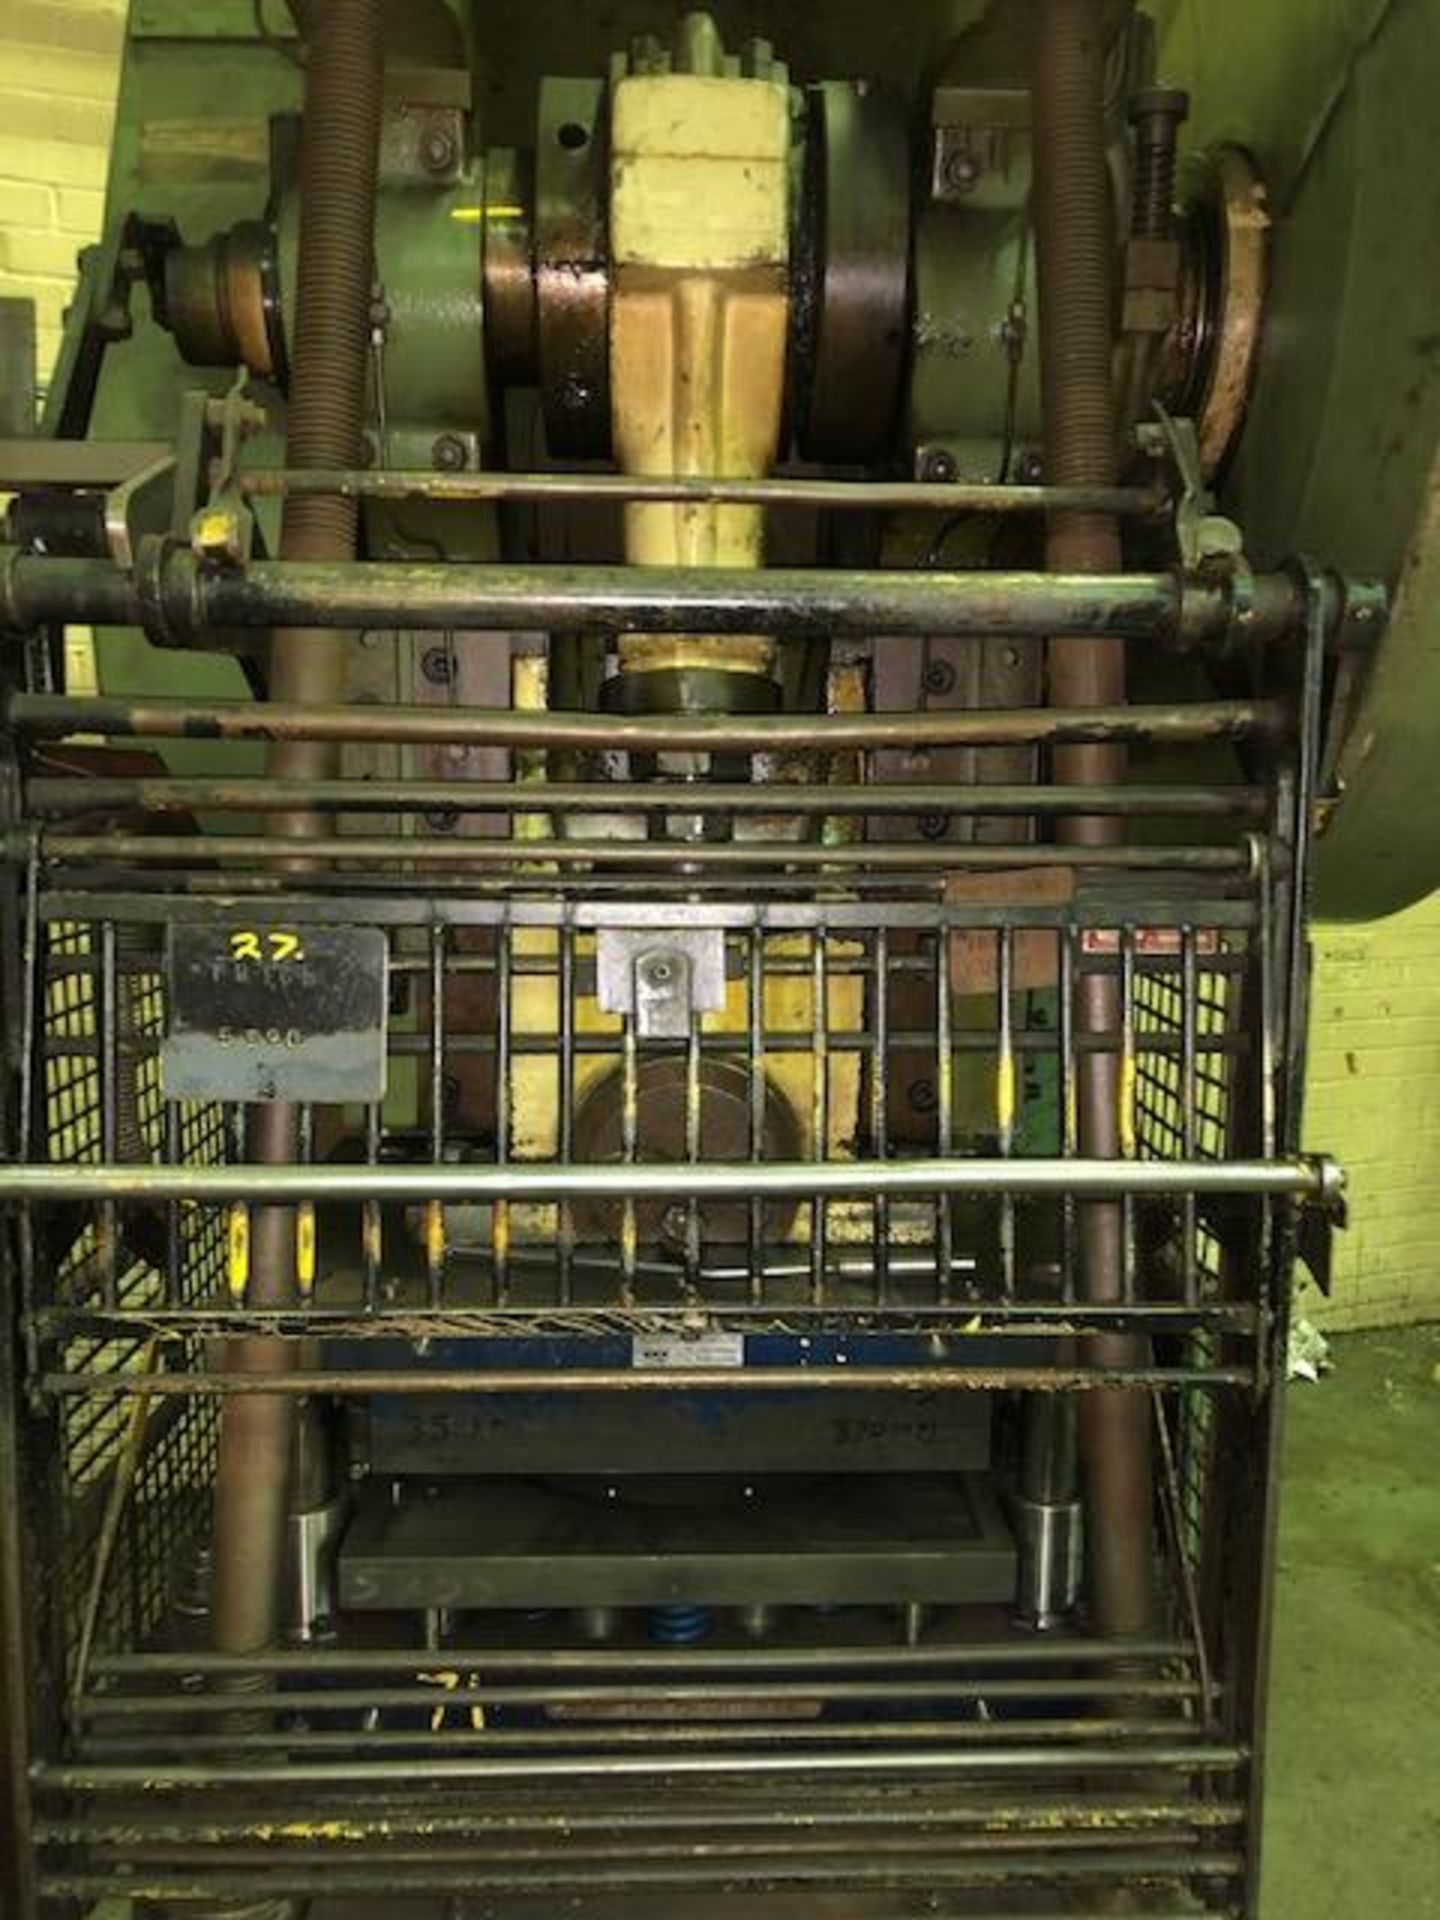 Cressex 70 tonne power press - Image 3 of 3